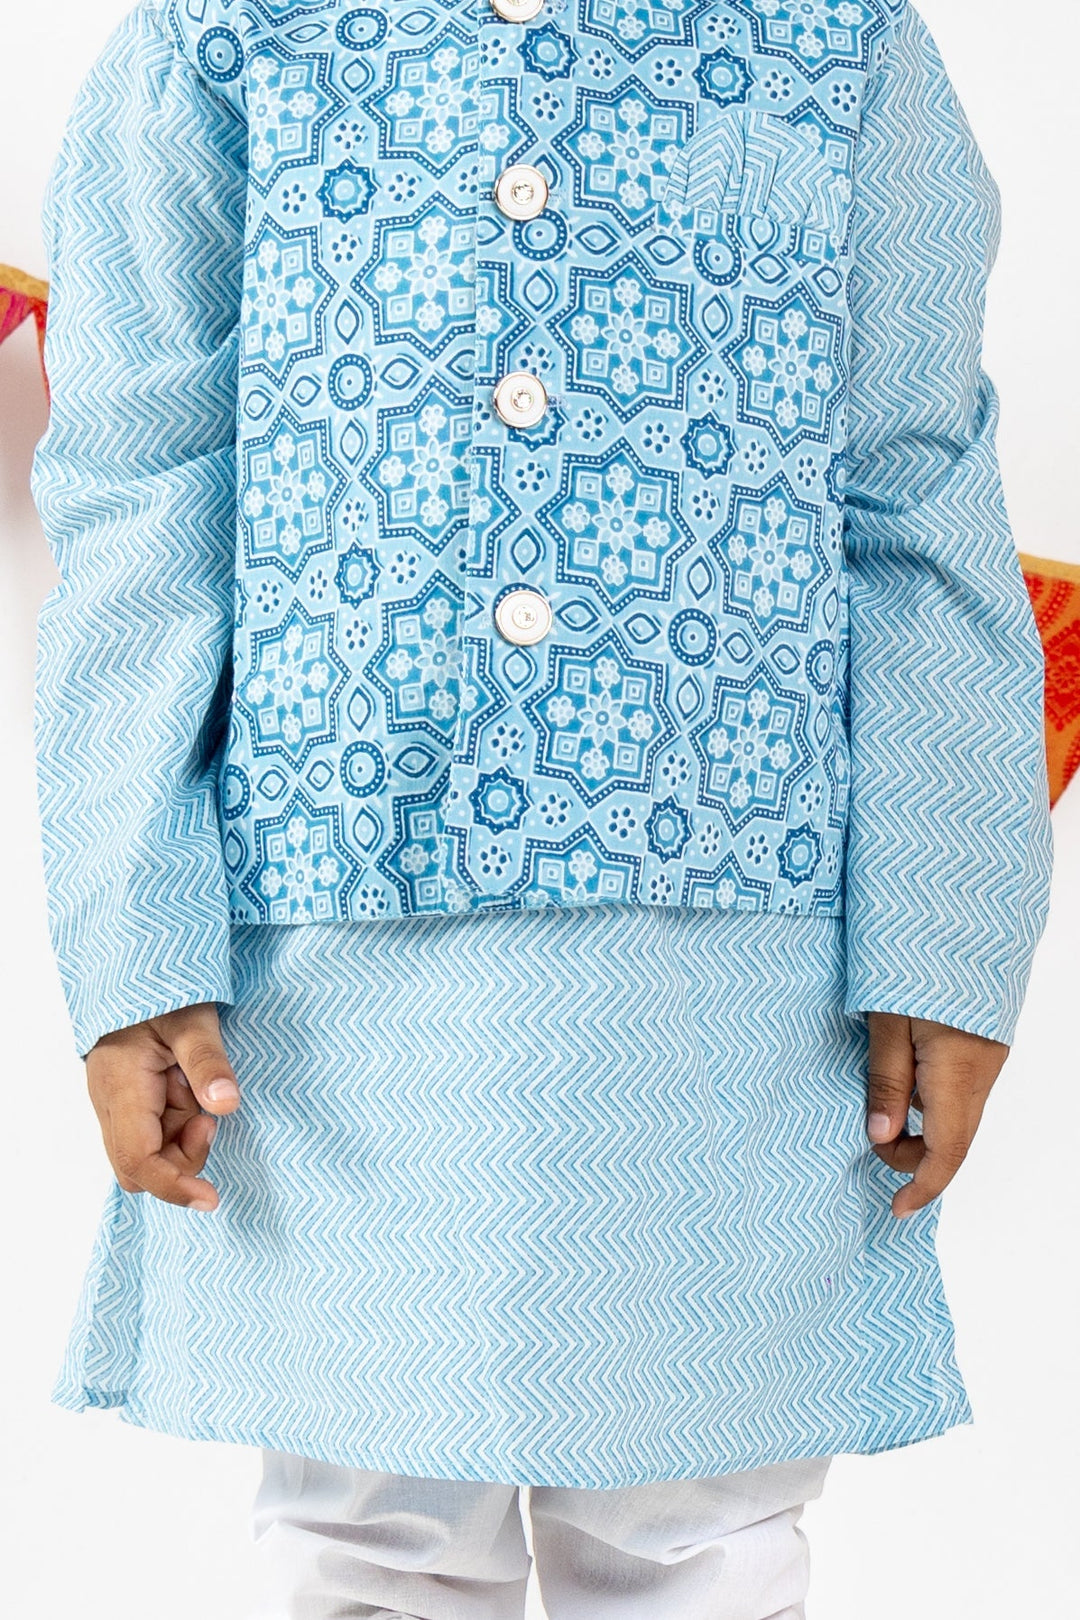 The Nesavu Ethnic Sets Indigo Printed Cotton Readymade Kurta For Baby Boys psr silks Nesavu